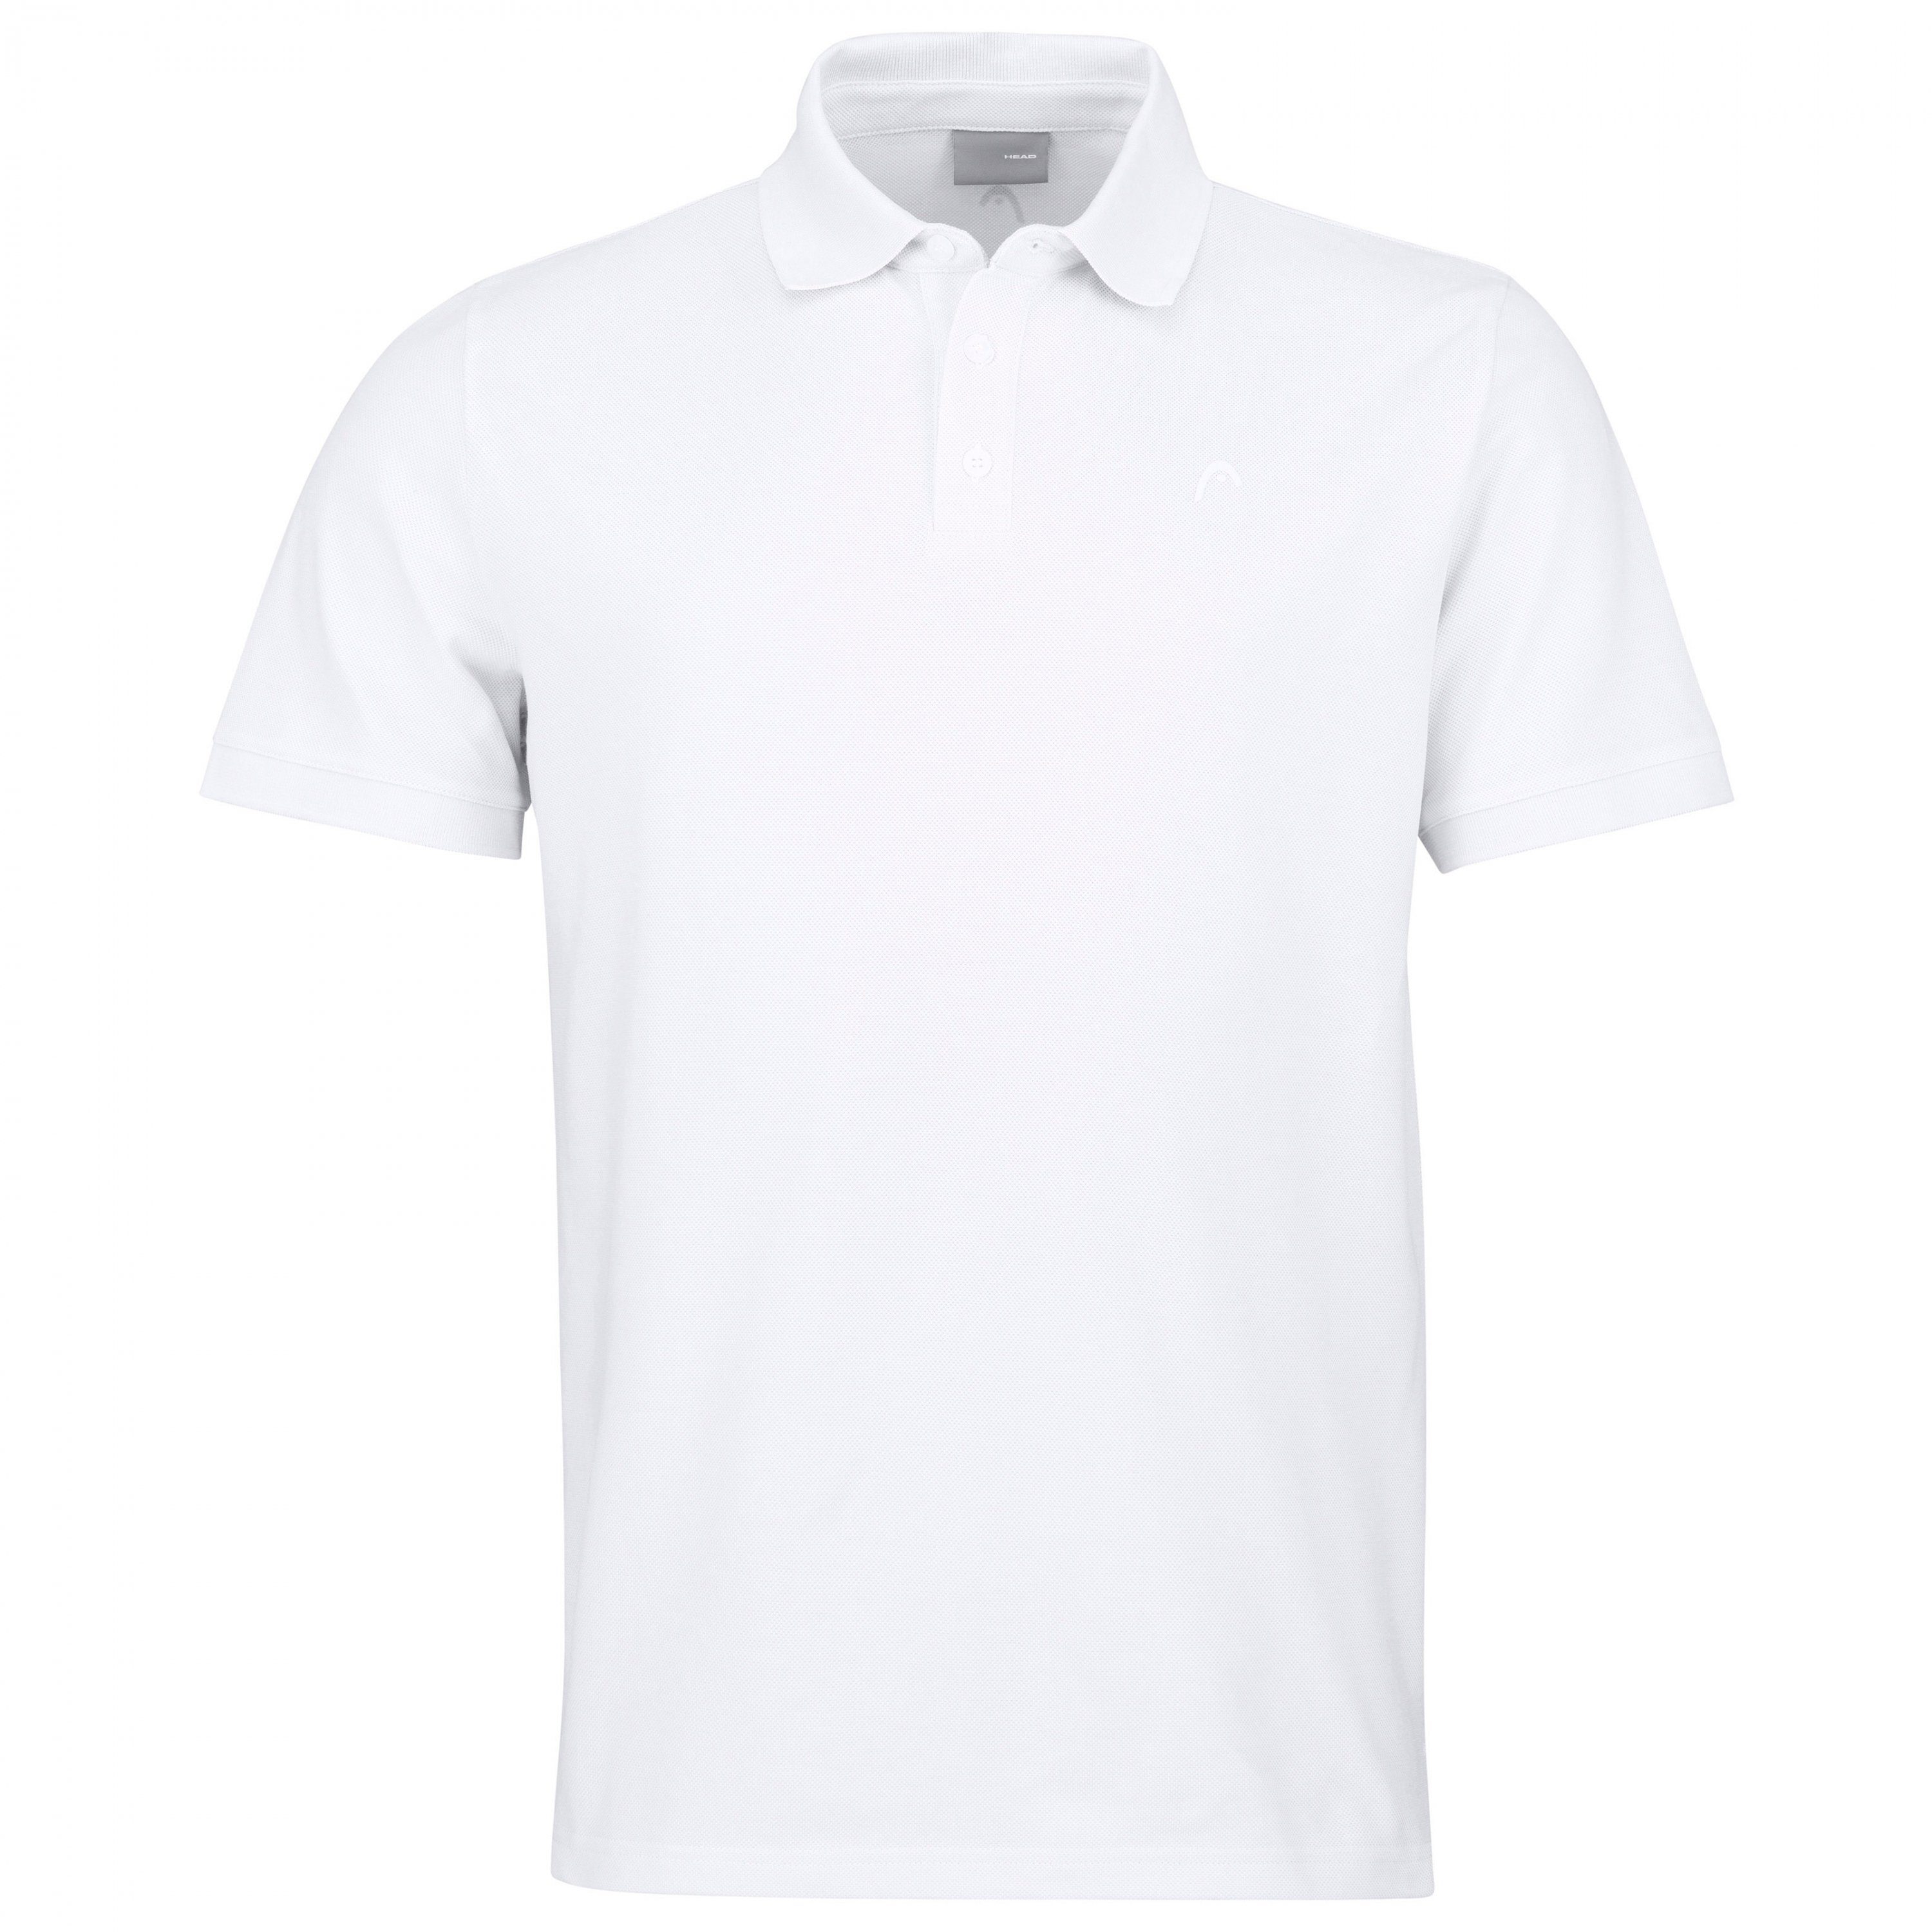 Head Tennisshirt Head Herren Polo Shirt WH white